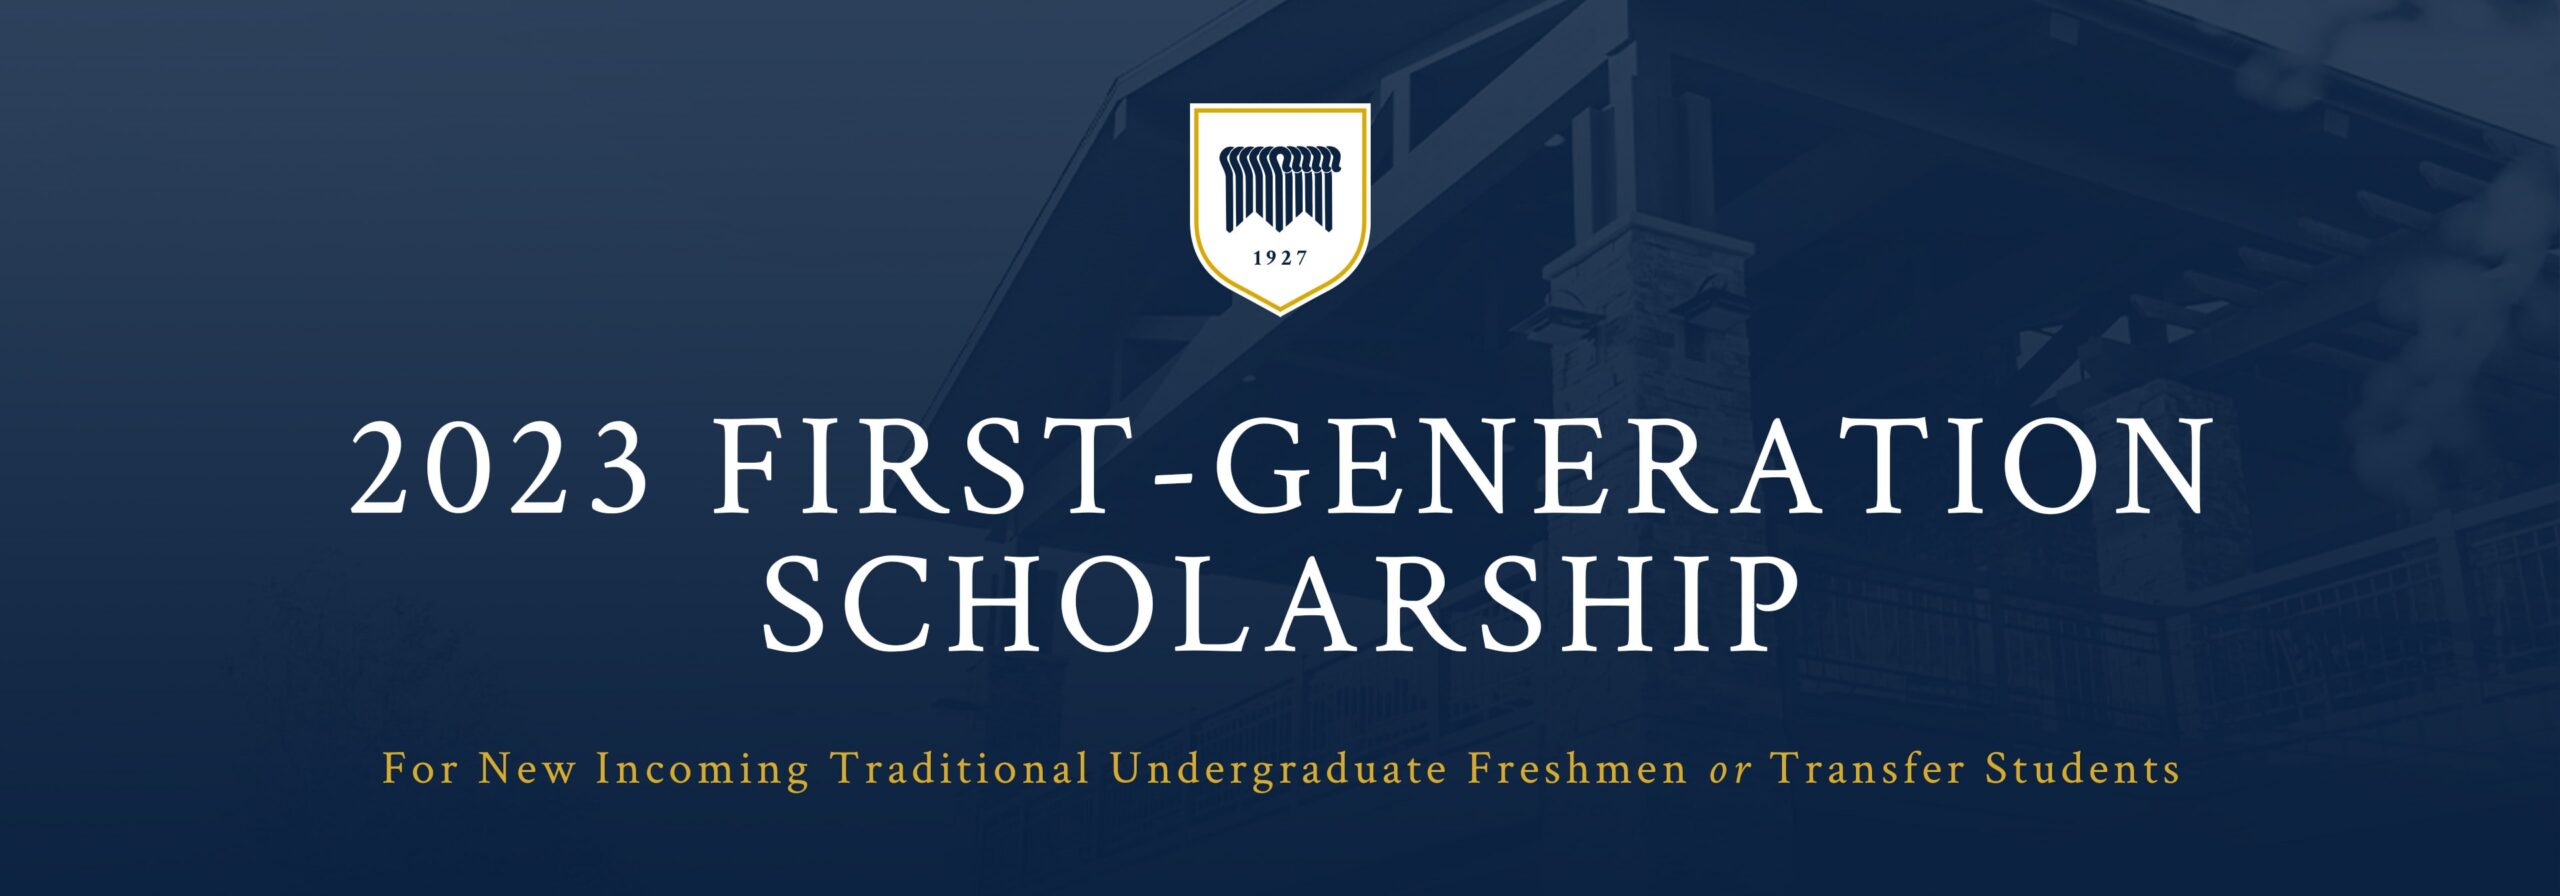 The Master's University First Generation Scholarship